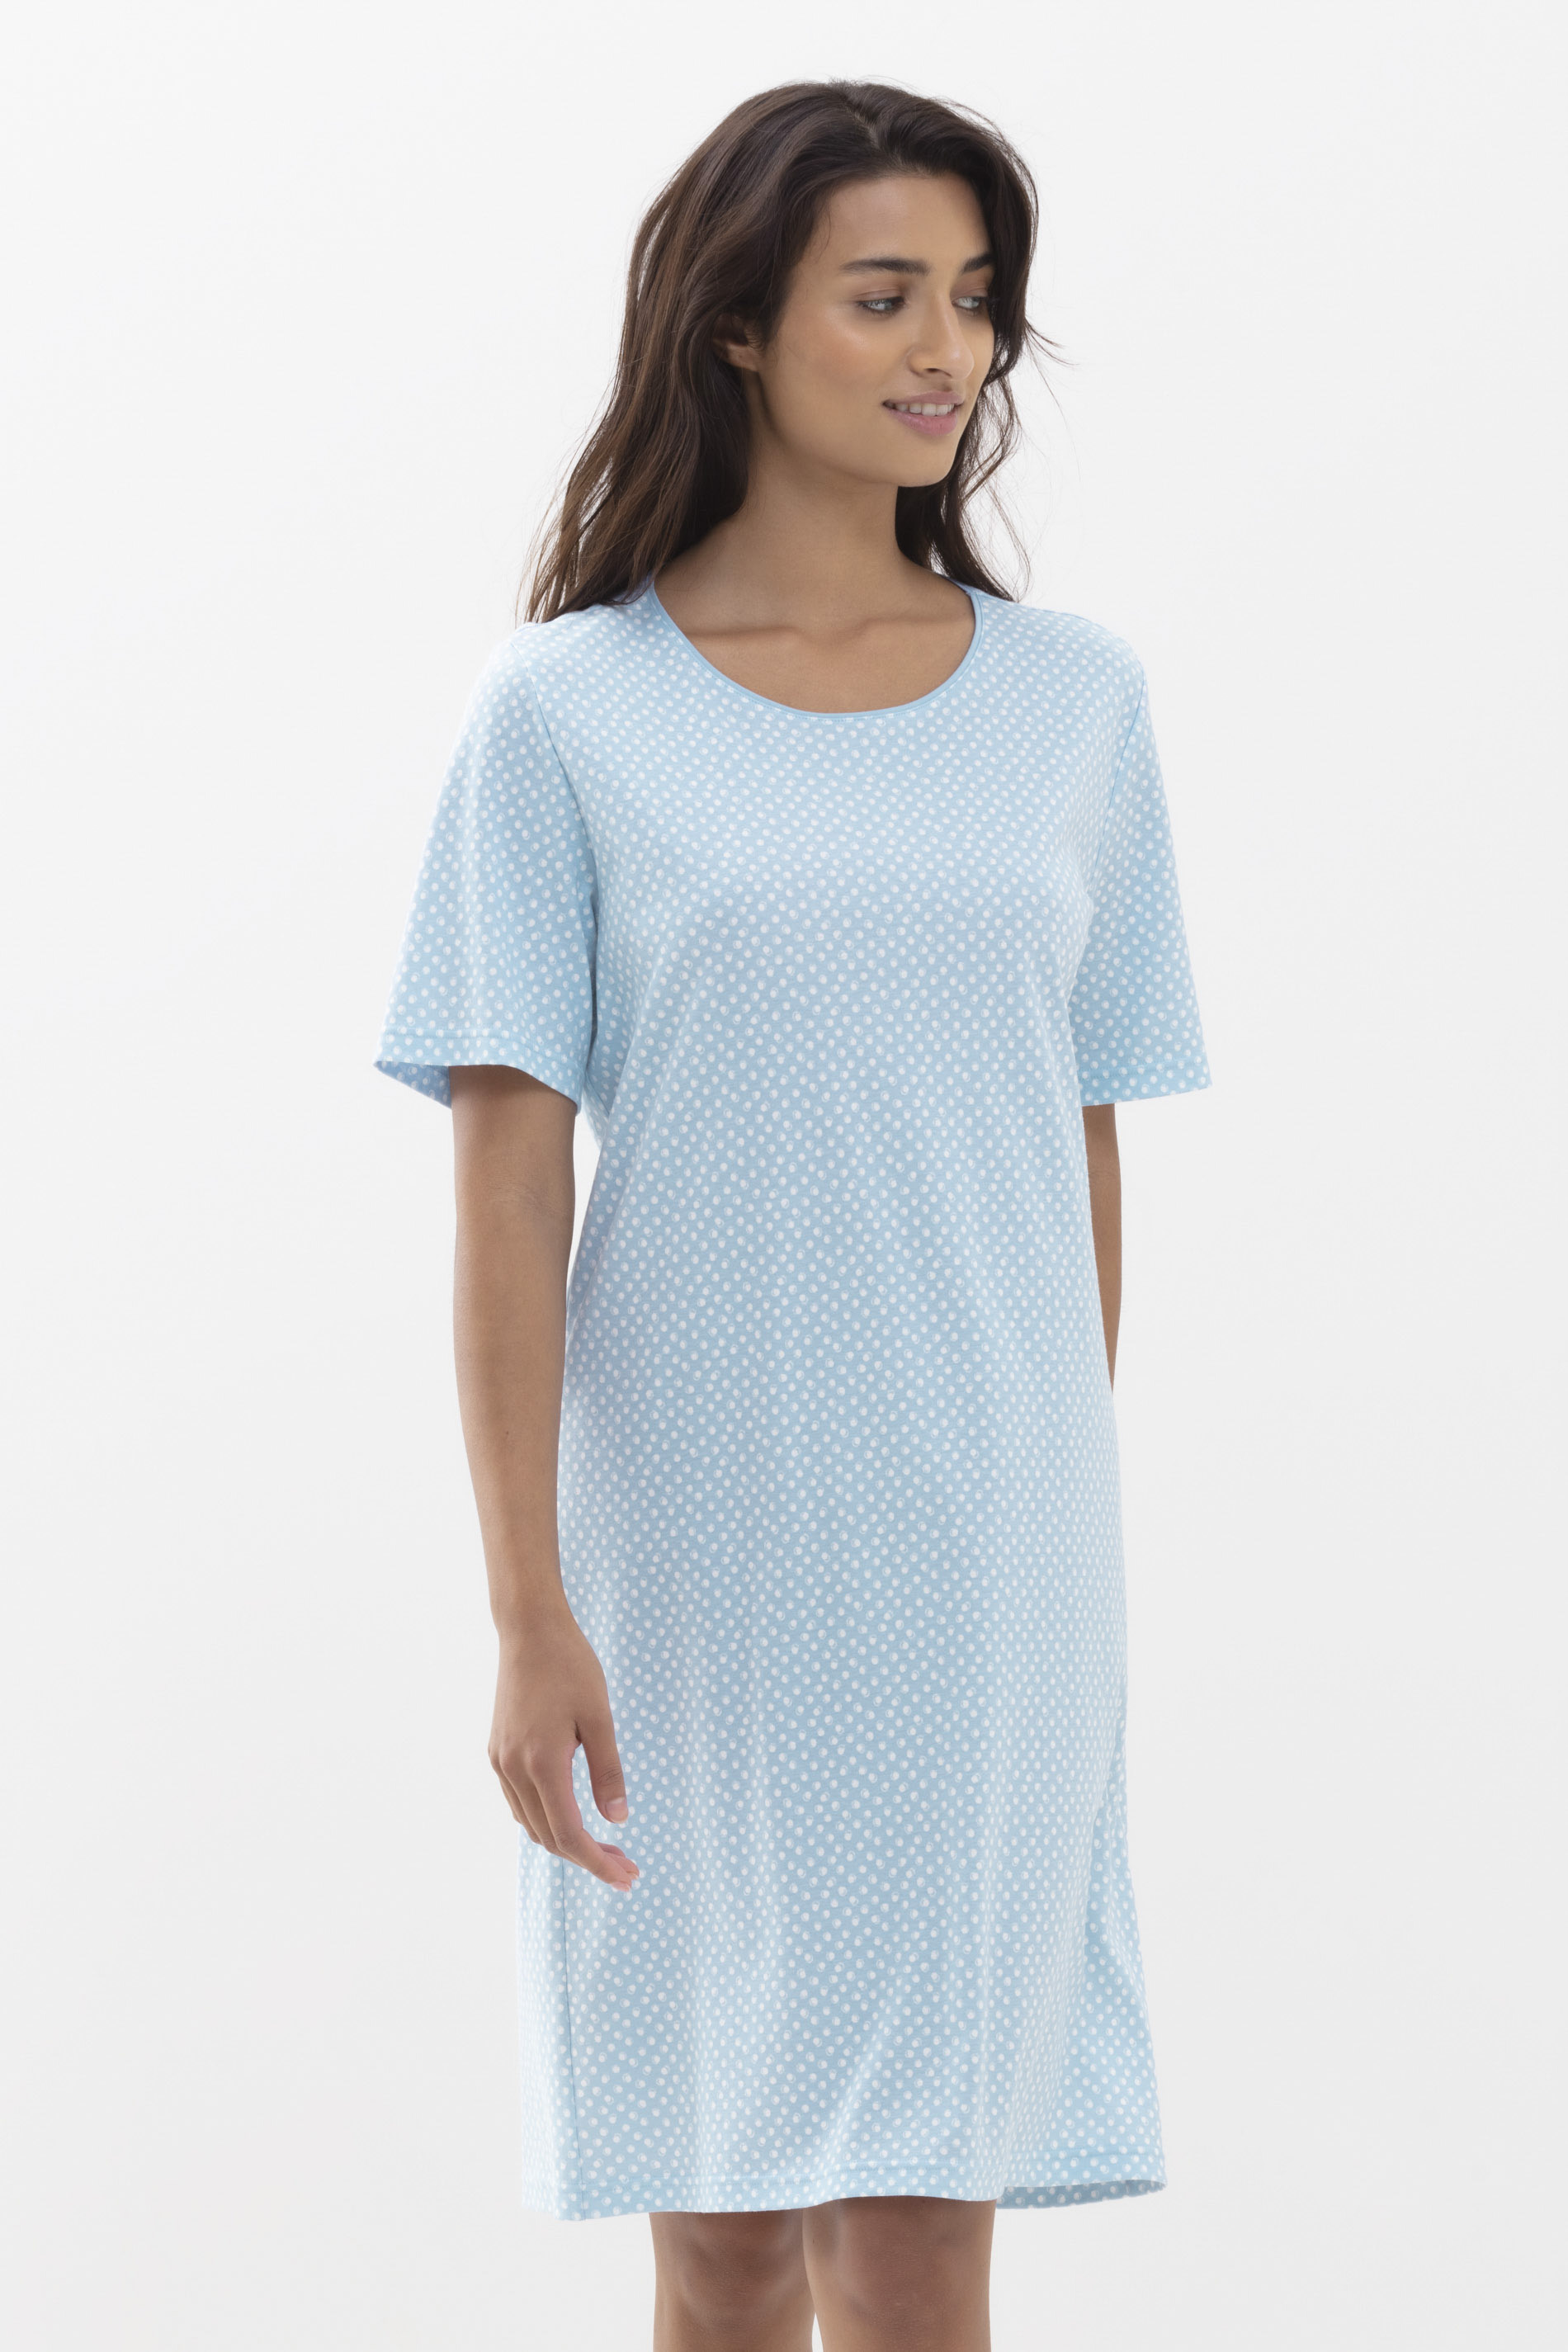 Nachthemd Dream Blue Serie Emelie Frontansicht | mey®